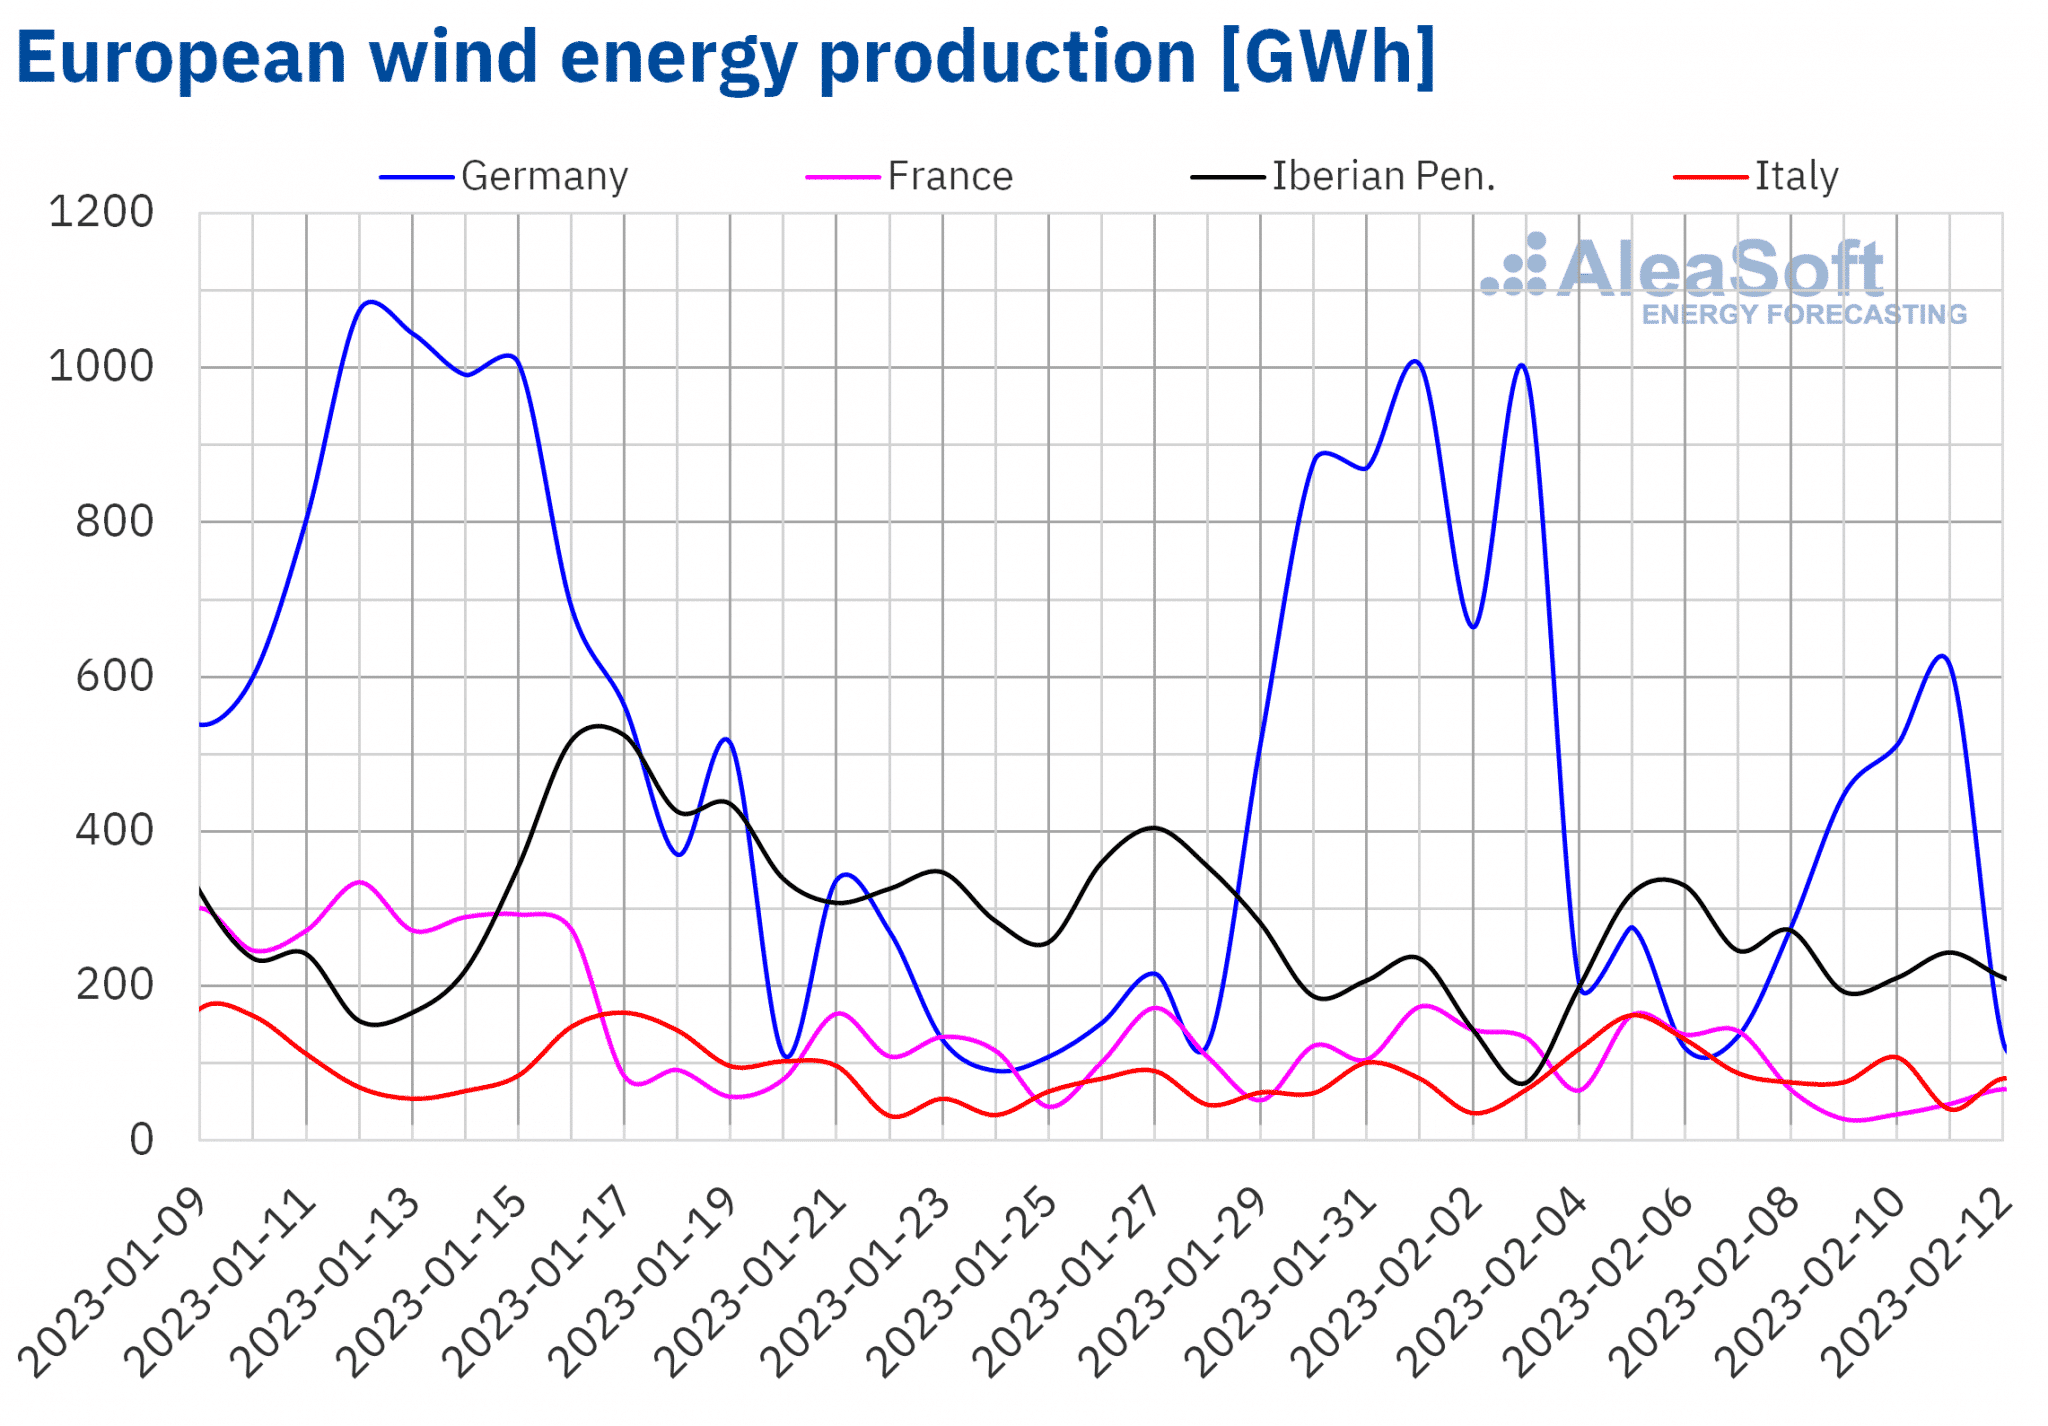 AleaSoft - wind energy production electricity europe